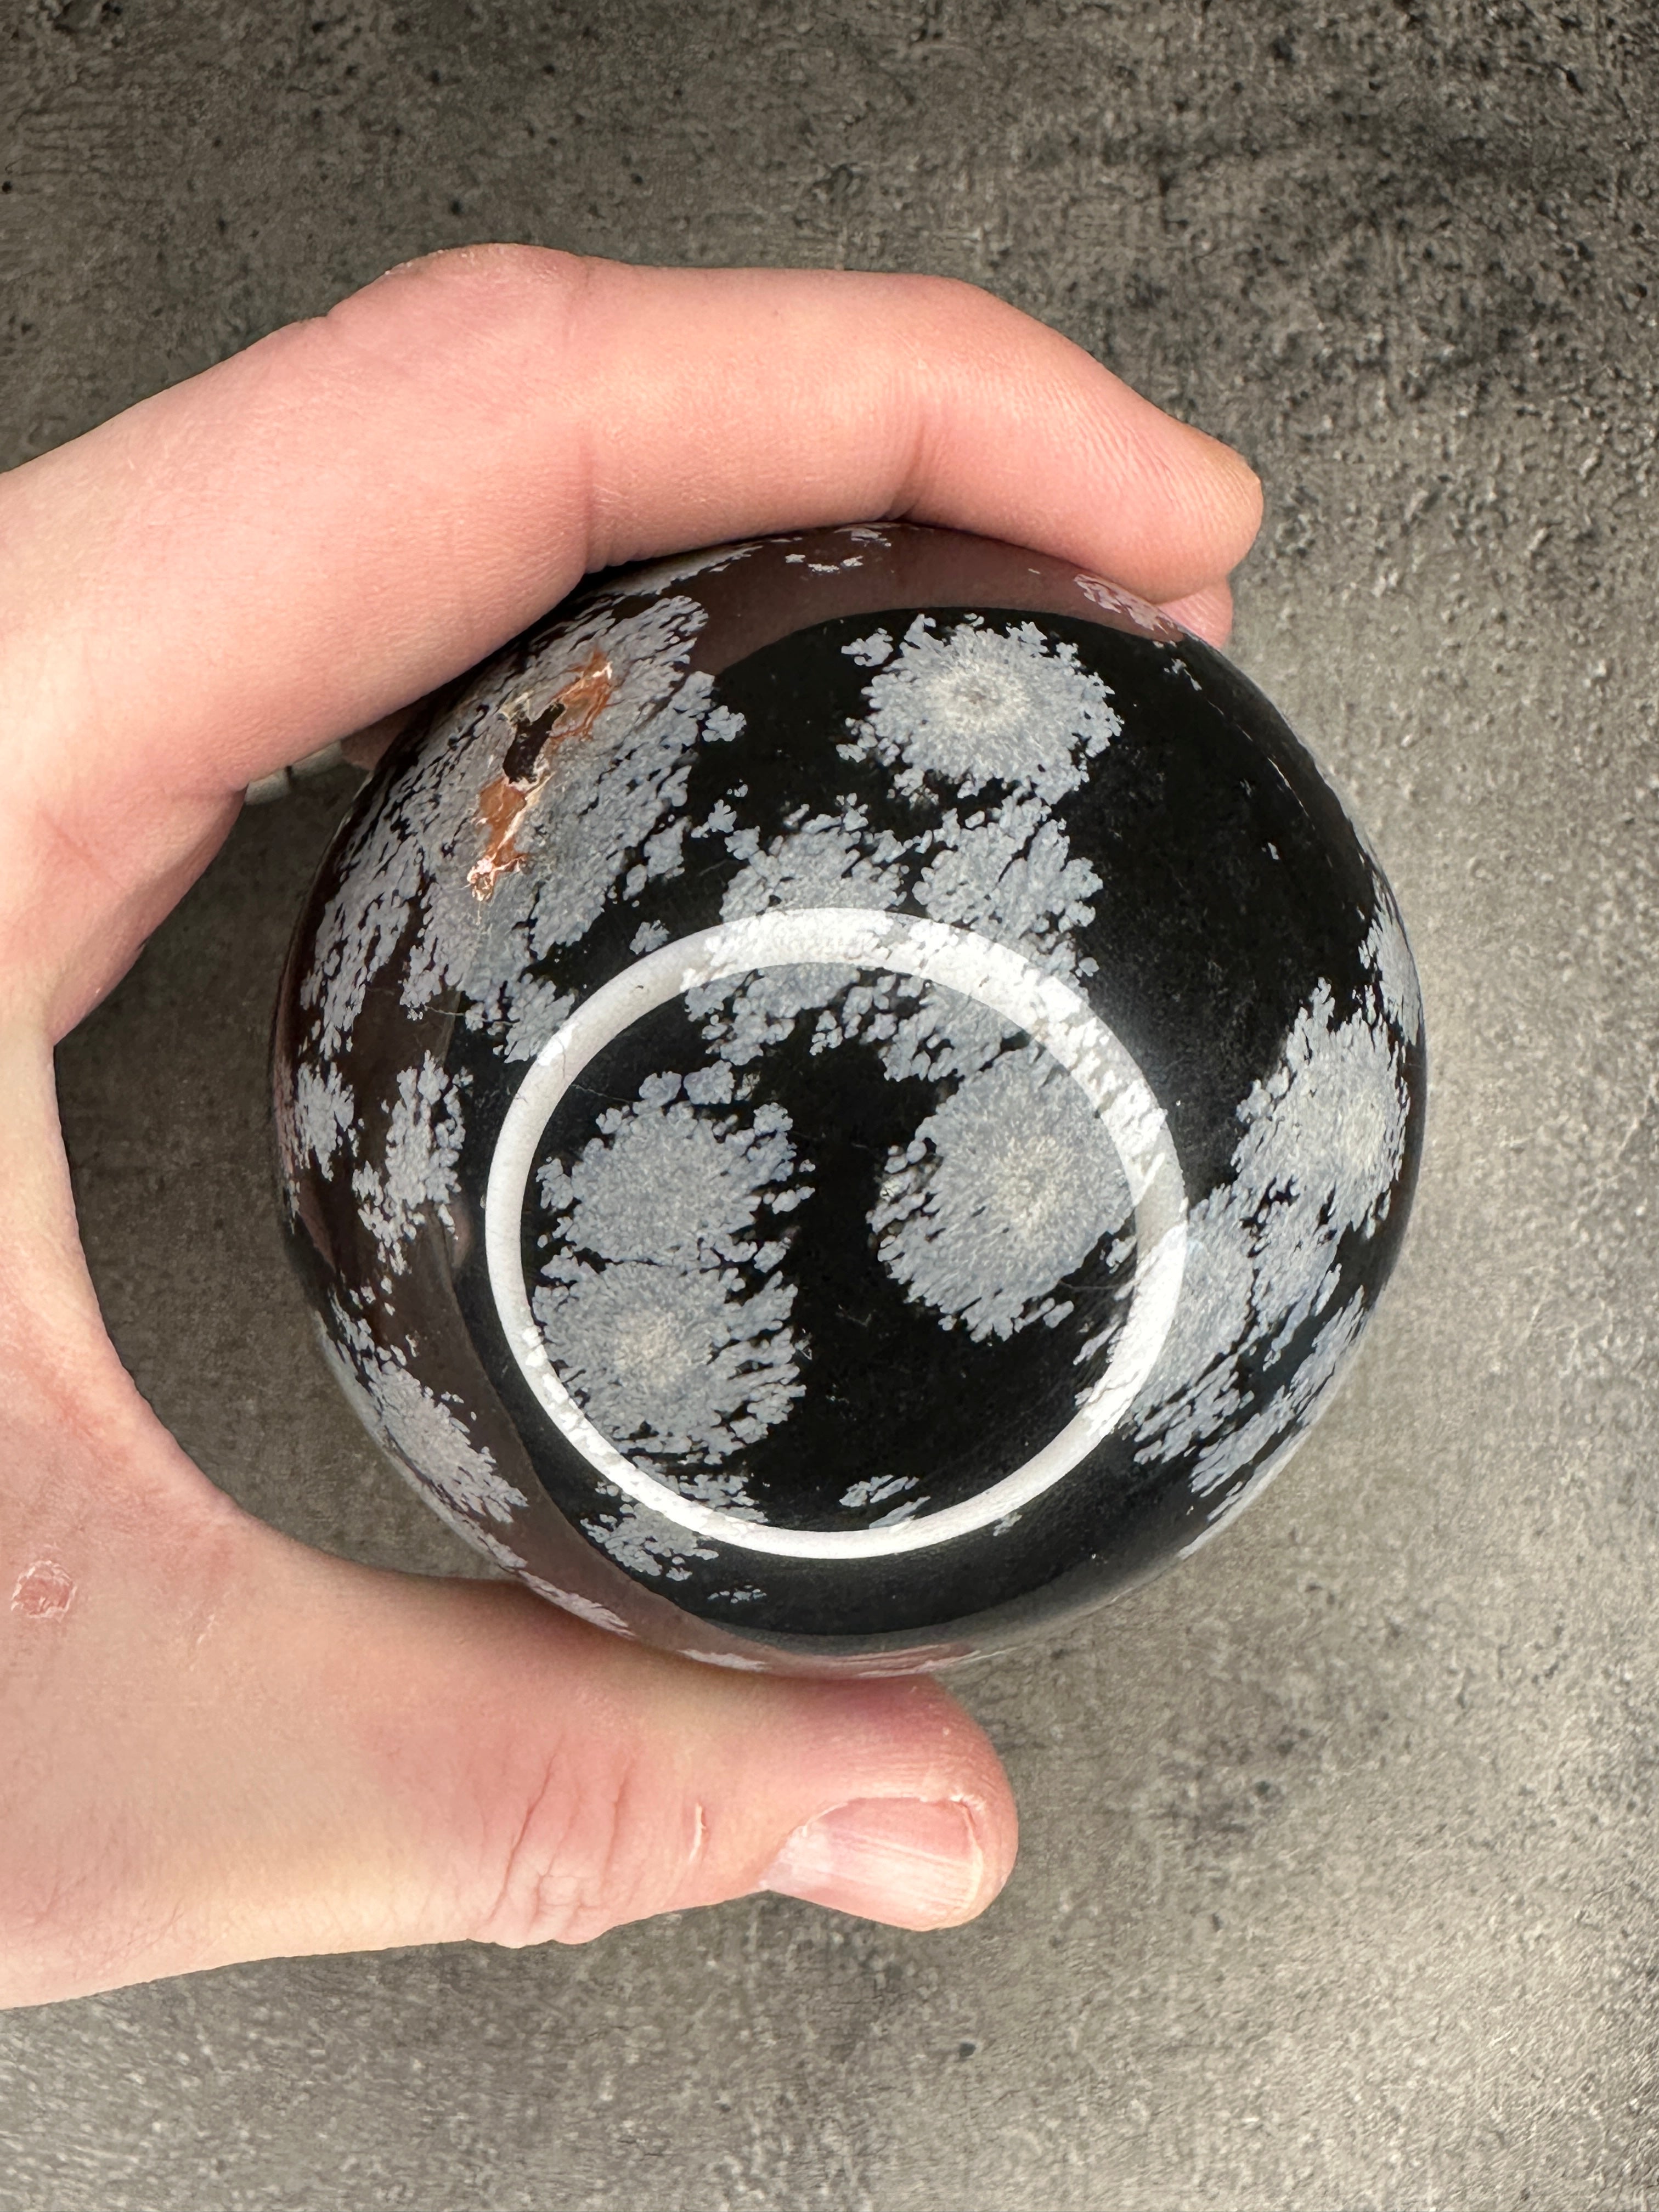 Snowflake obsidian - XL sphere